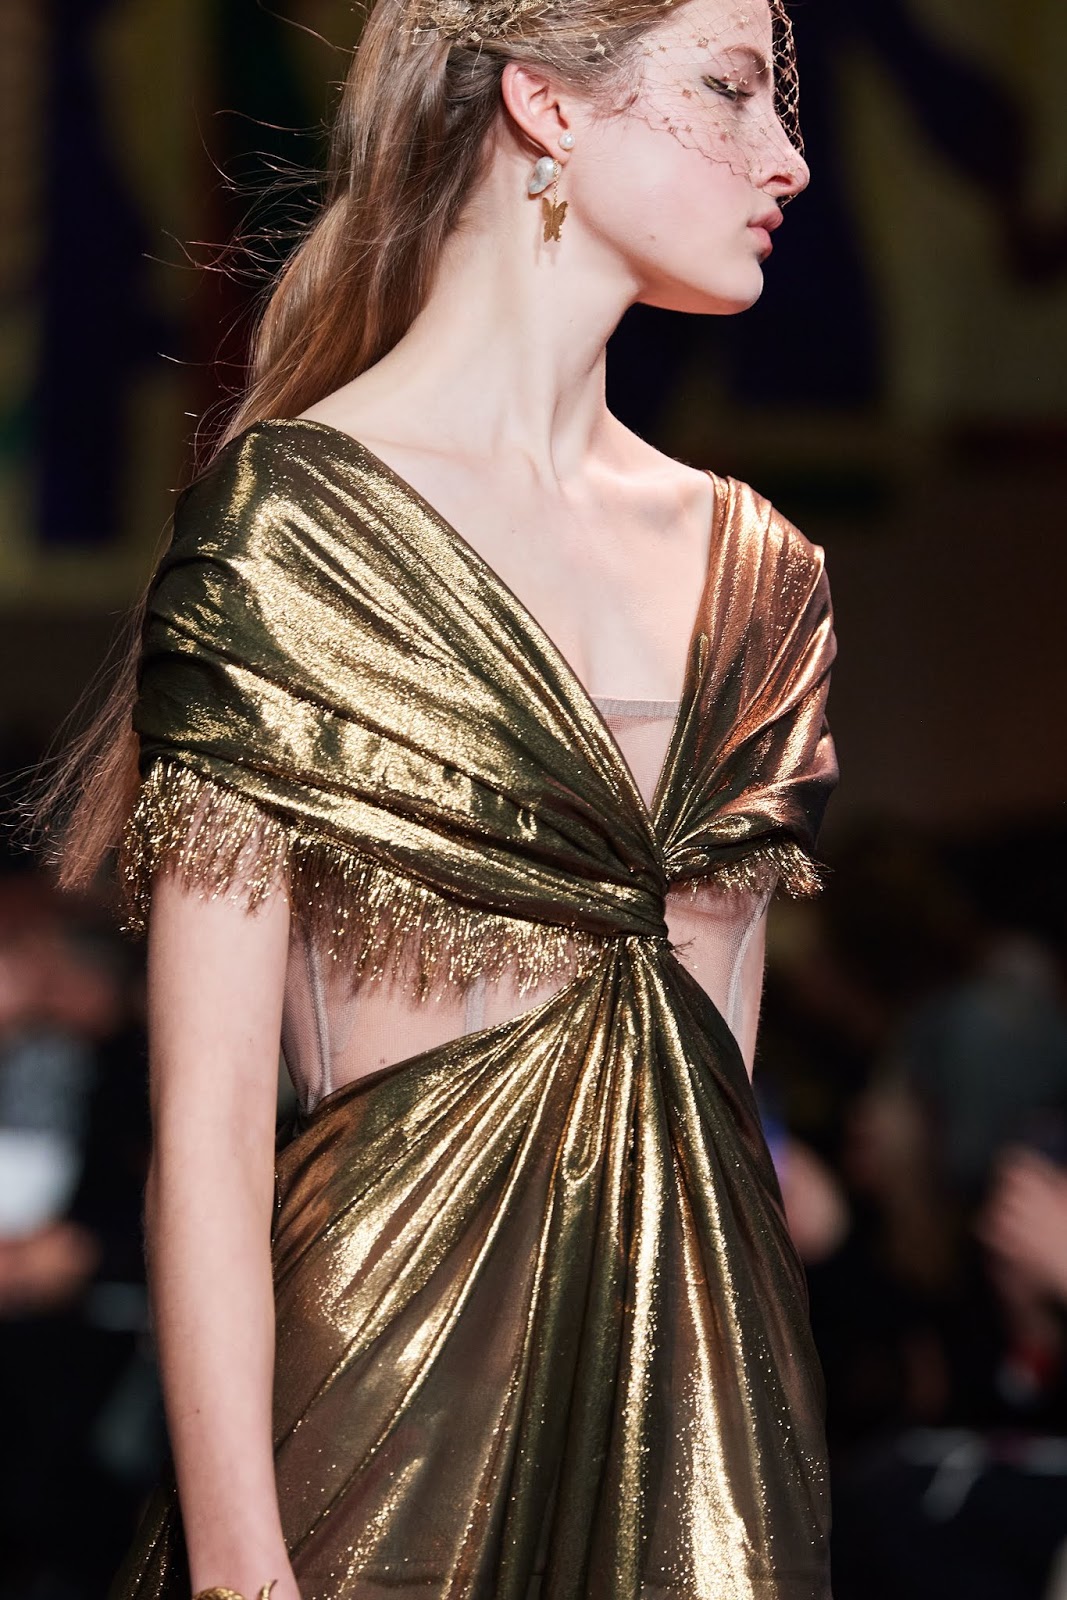 DIOR: Haute Couture January 22, 2020 | ZsaZsa Bellagio - Like No Other